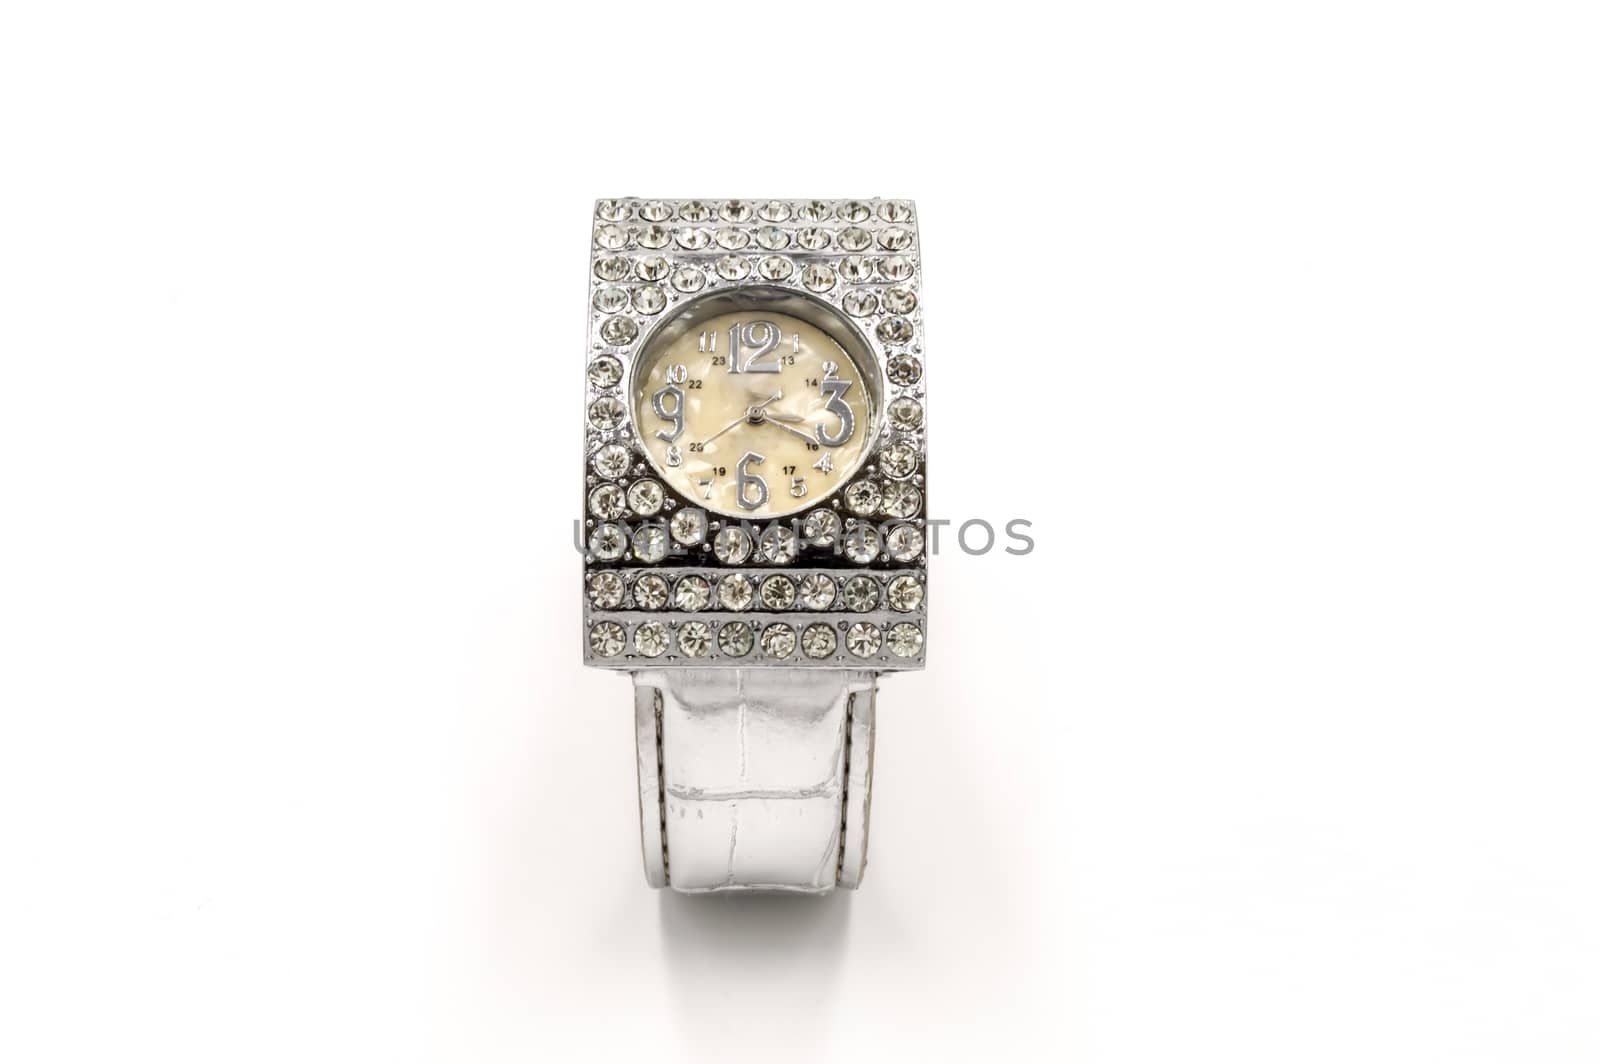 Silver quartz watch with precious stones  by Philou1000